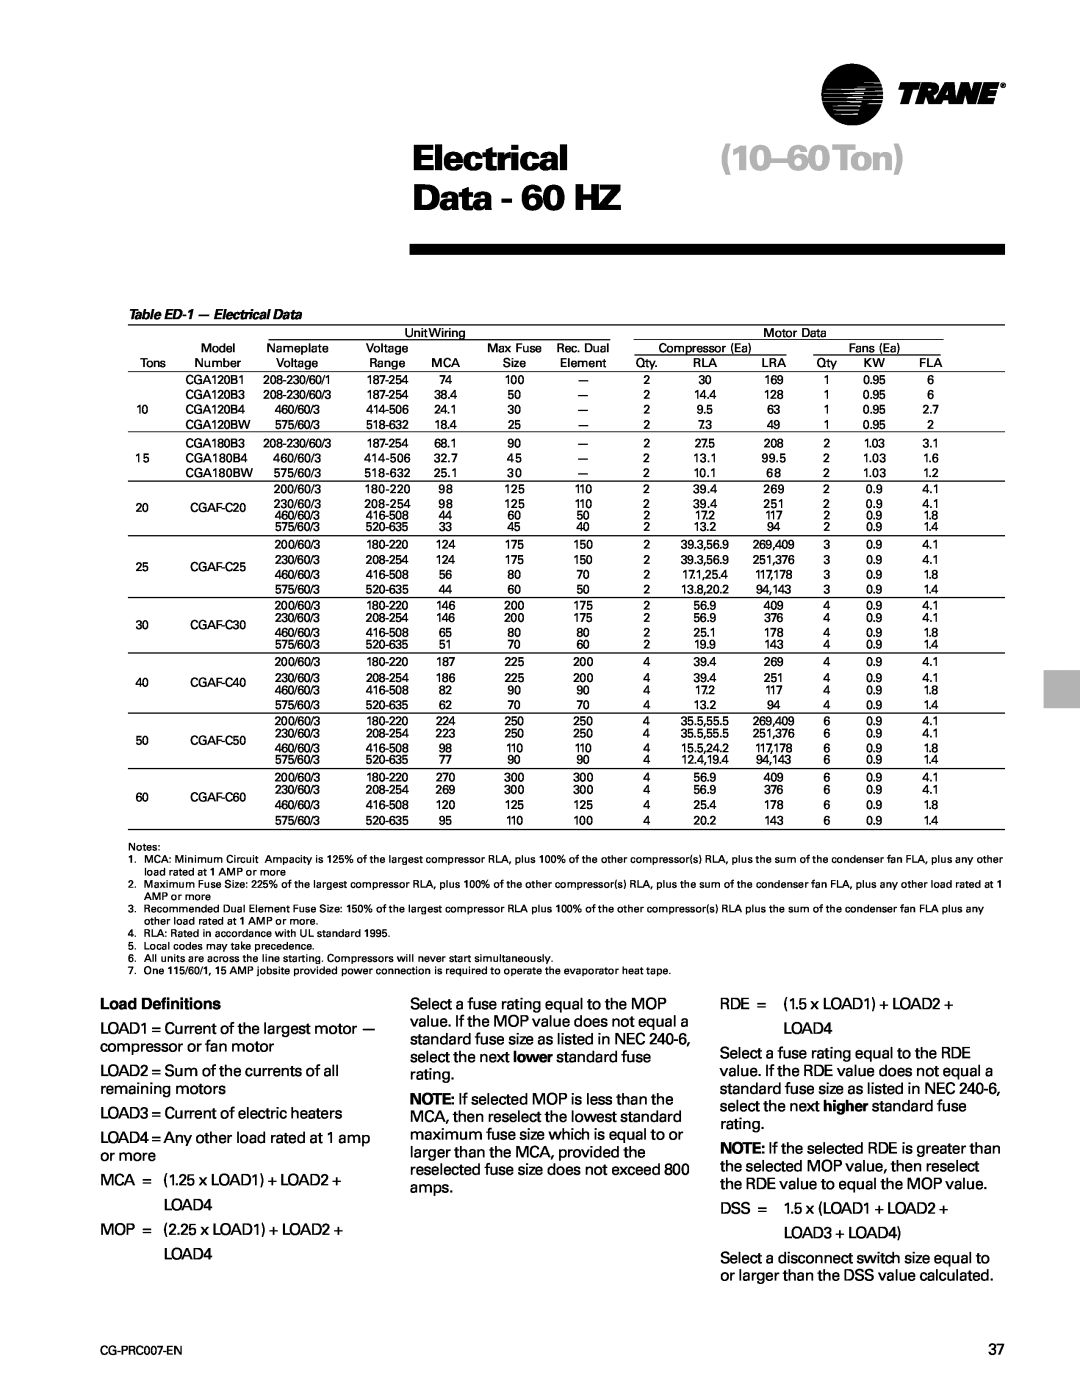 Trane CG-PRC007-EN manual Electrical 10-60Ton Data - 60 HZ, Load Definitions 